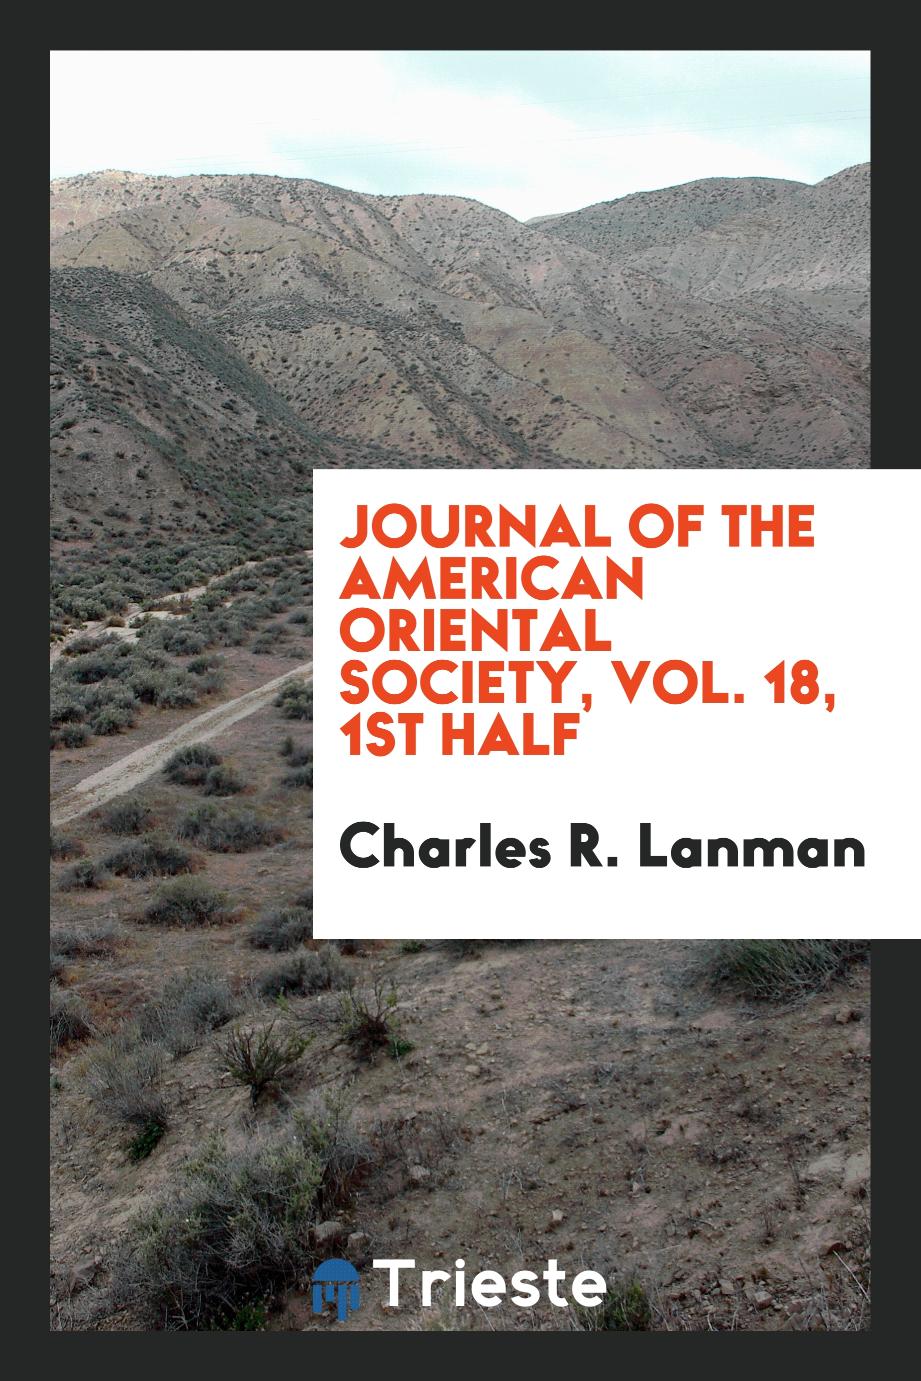 Journal of the American Oriental Society, Vol. 18, 1st half